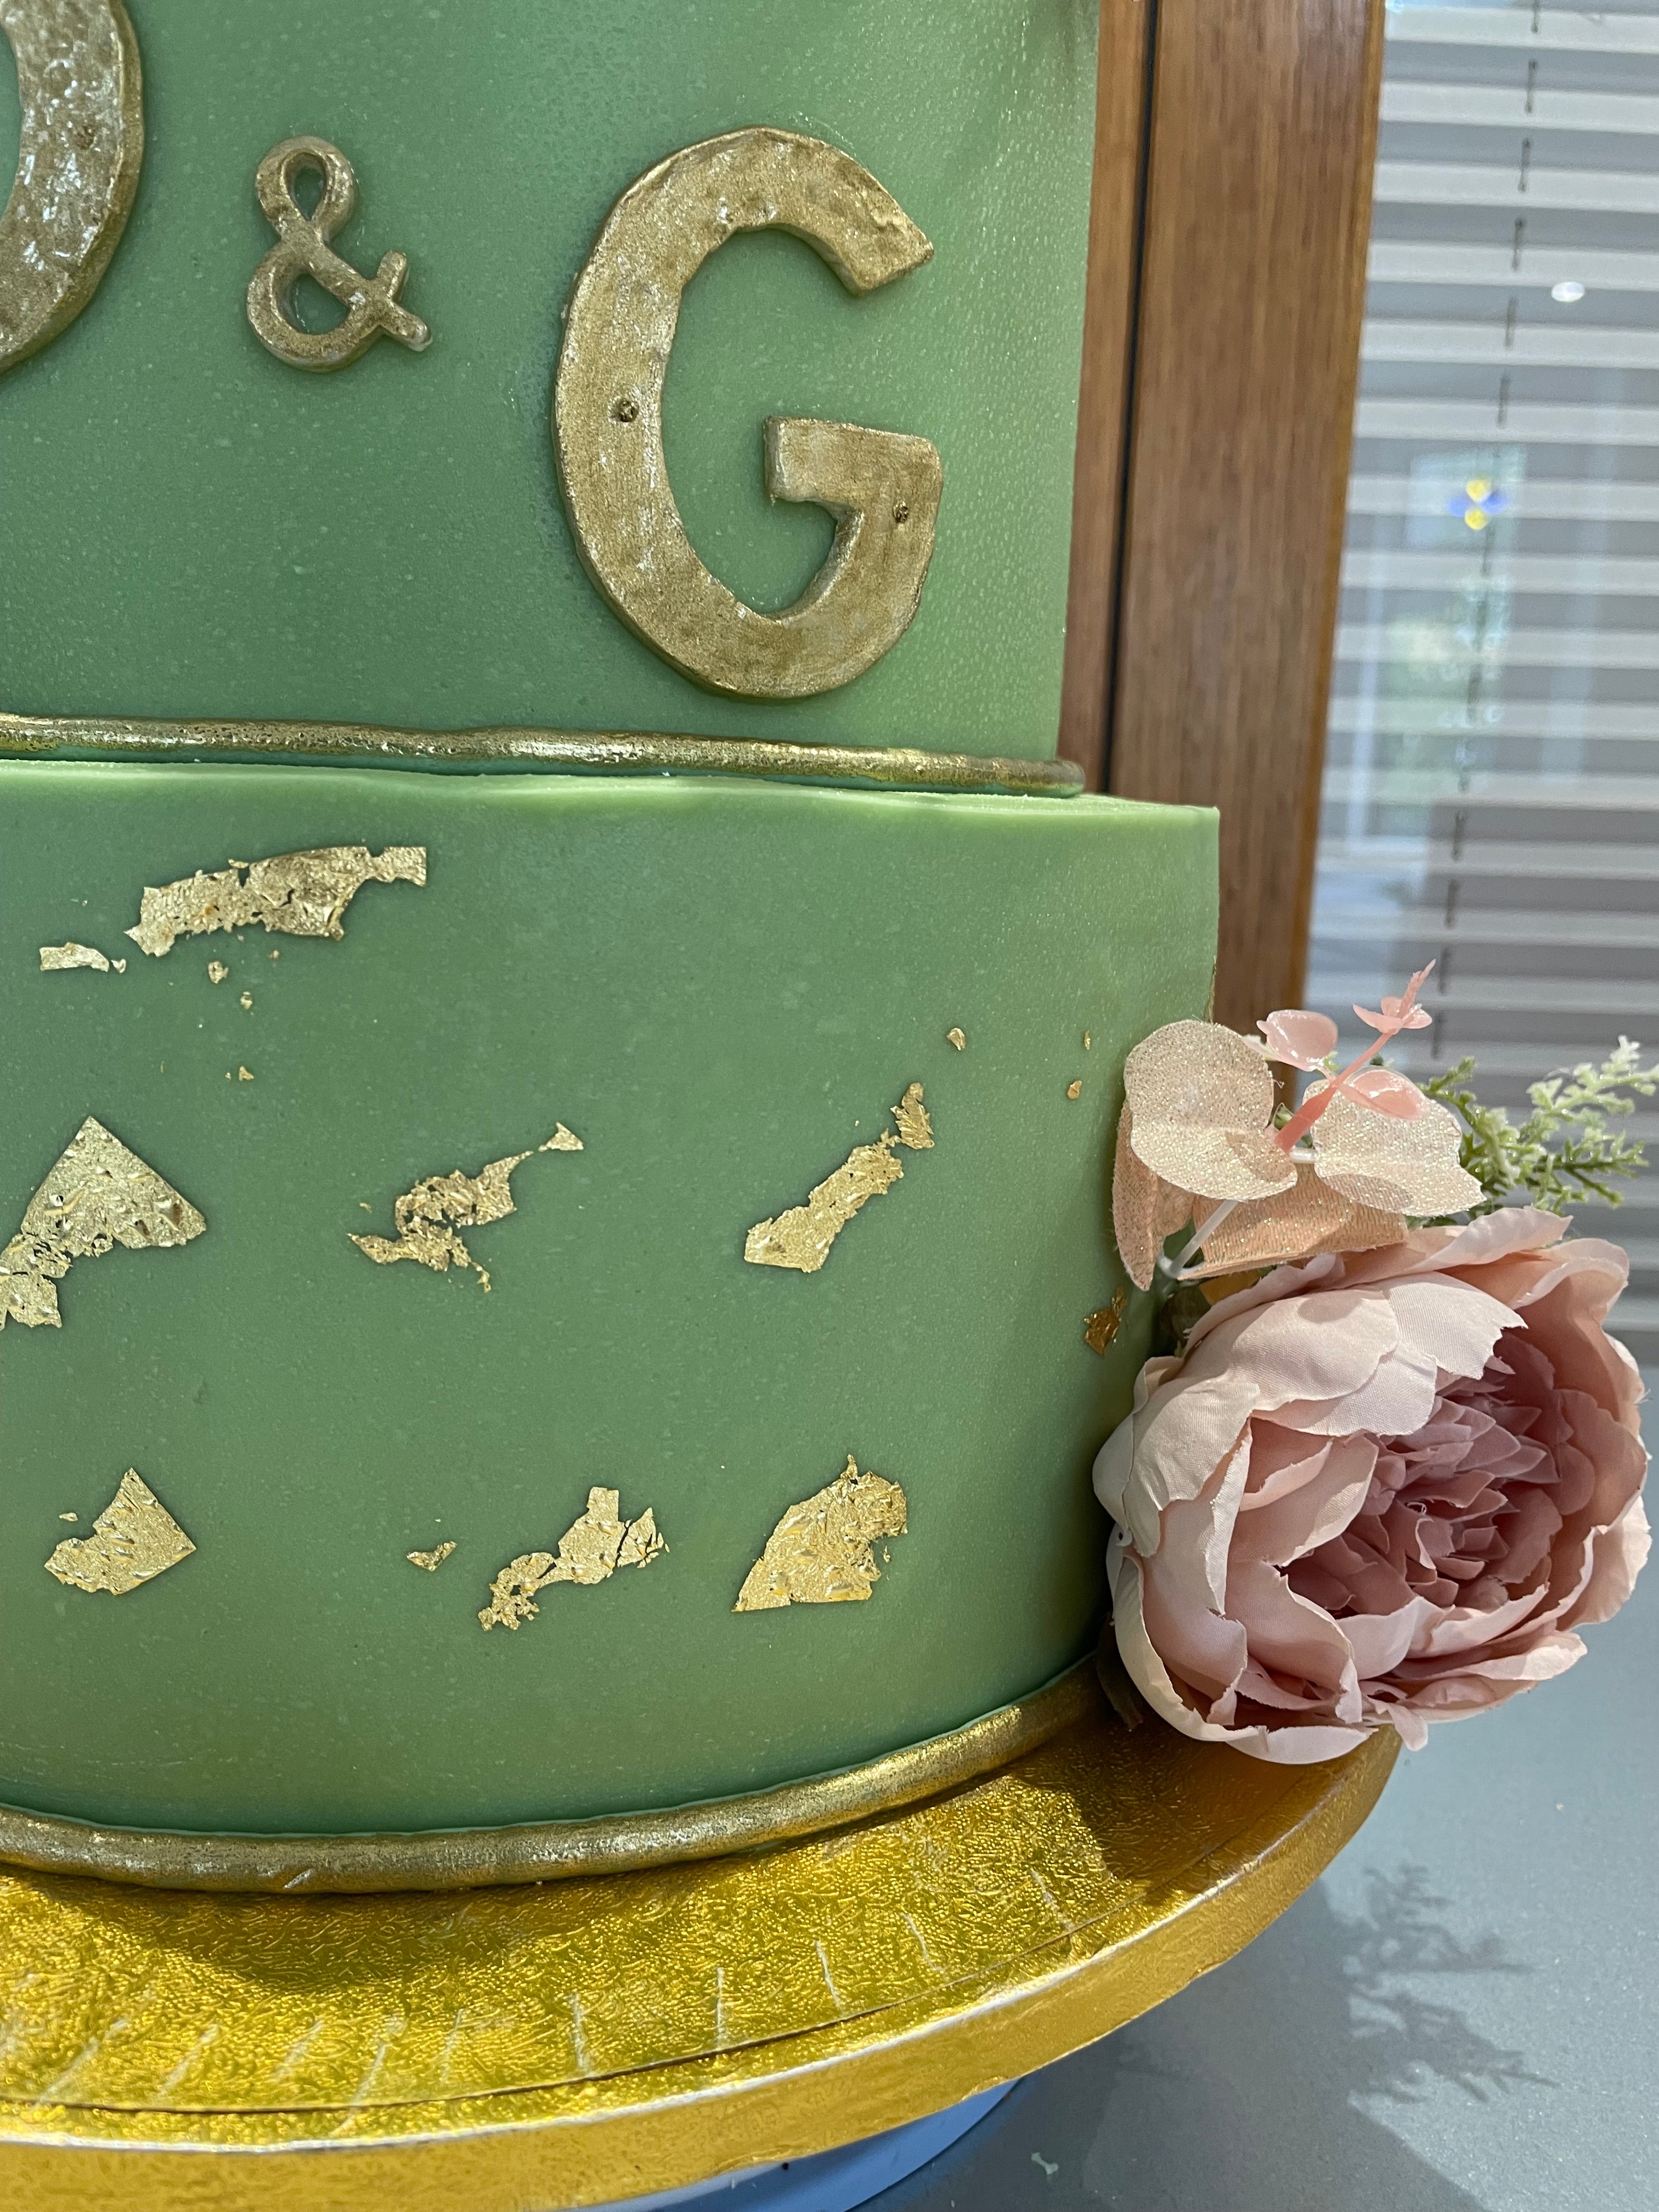 SAGE FLOWER CELEBRATION CAKE